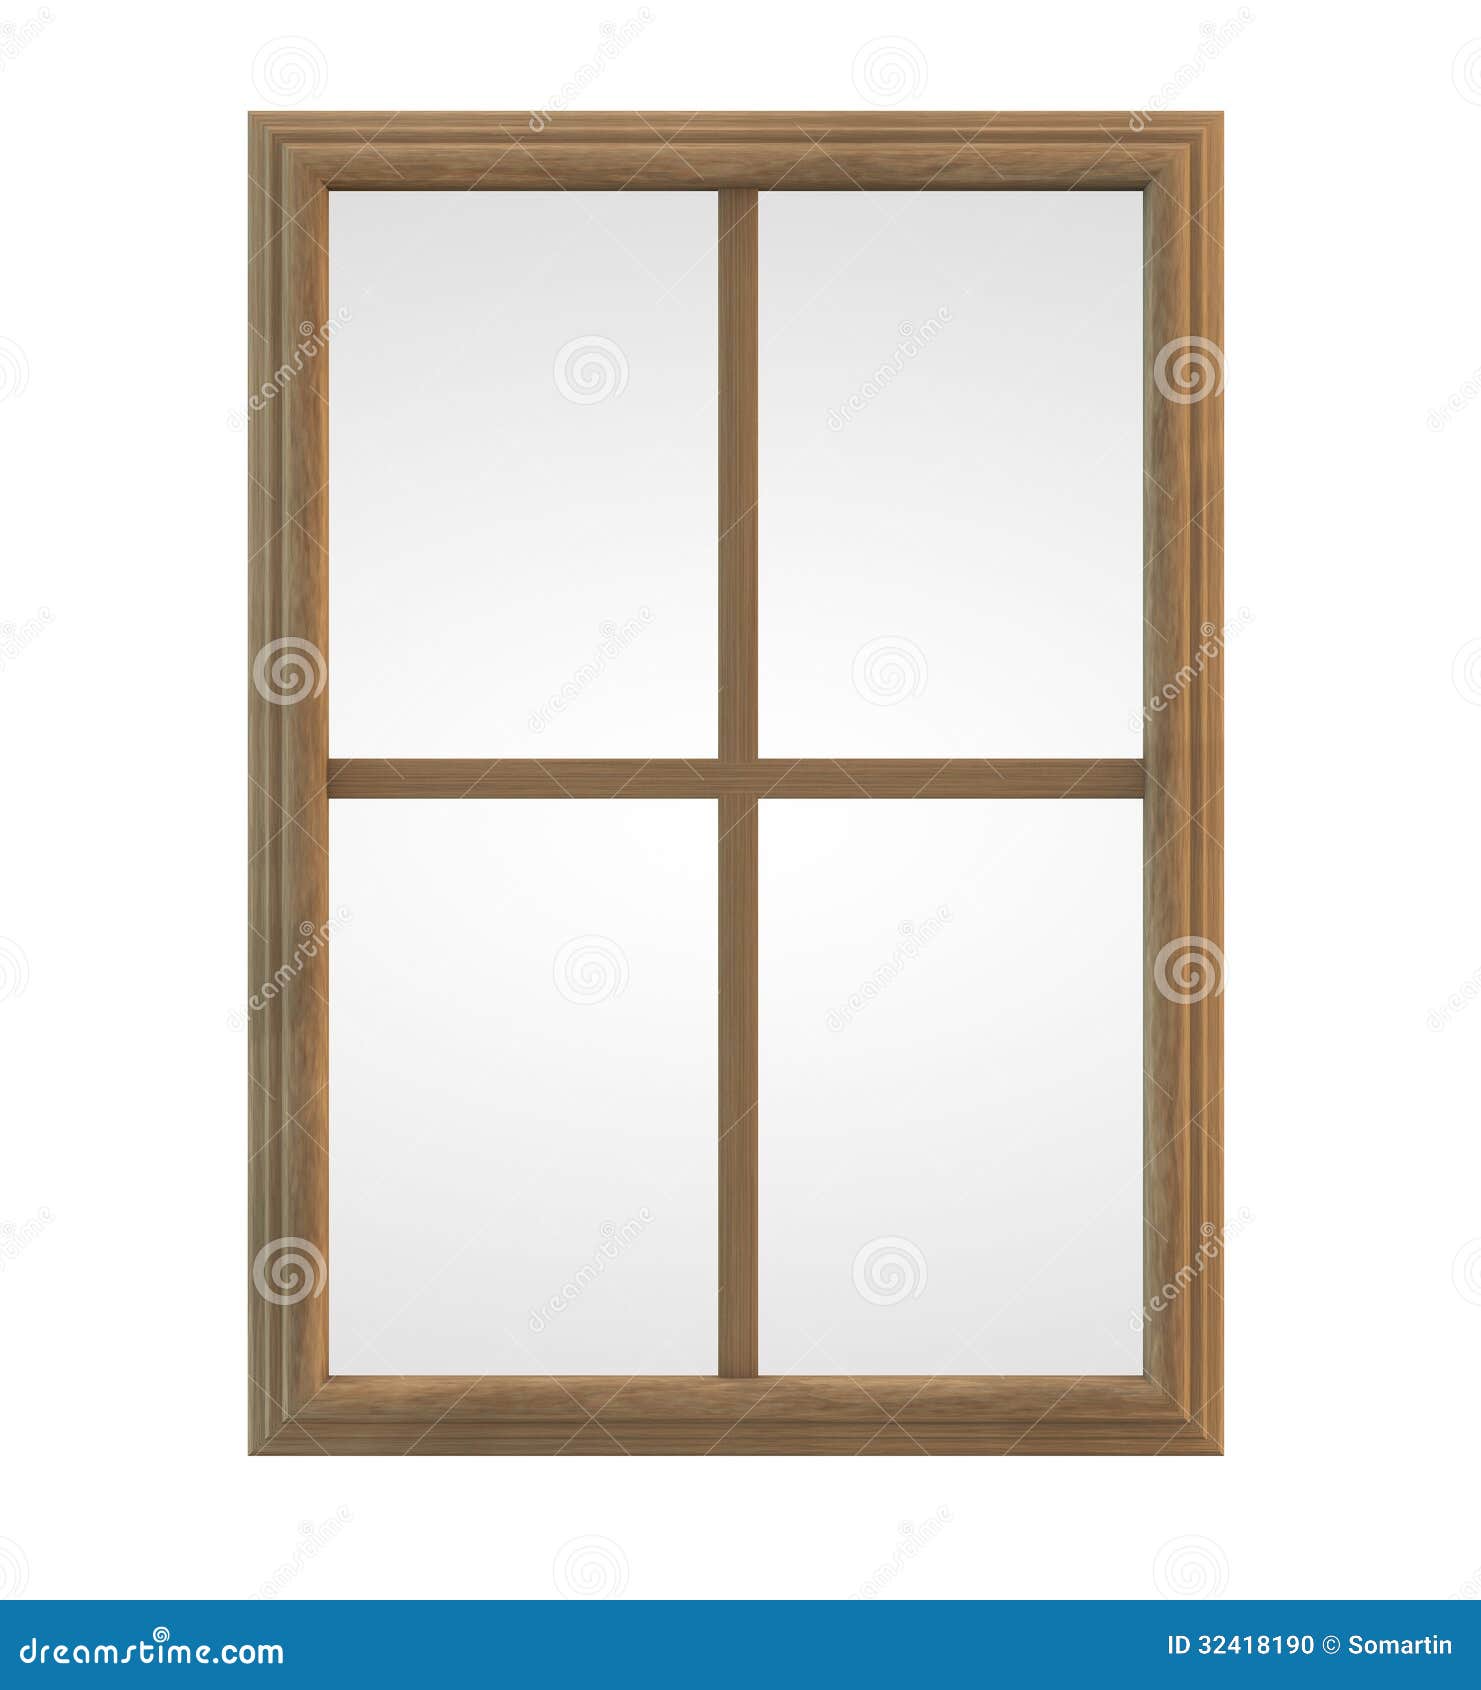 clipart window frames - photo #10